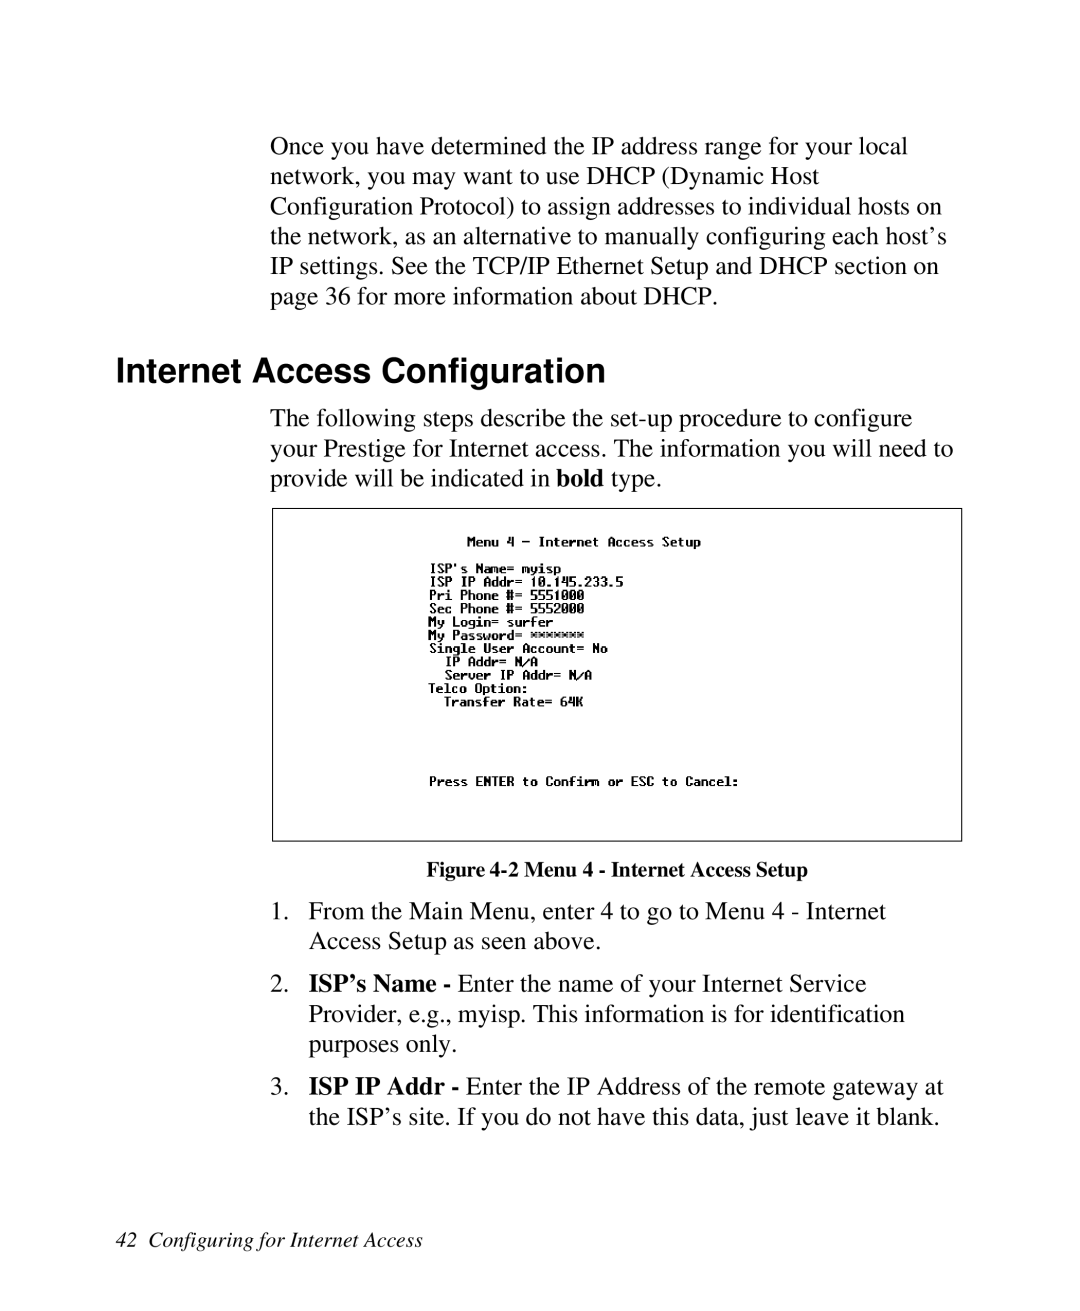 ZyXEL Communications Prestige 128 user manual Internet Access Configuration, 2 Menu 4 - Internet Access Setup 